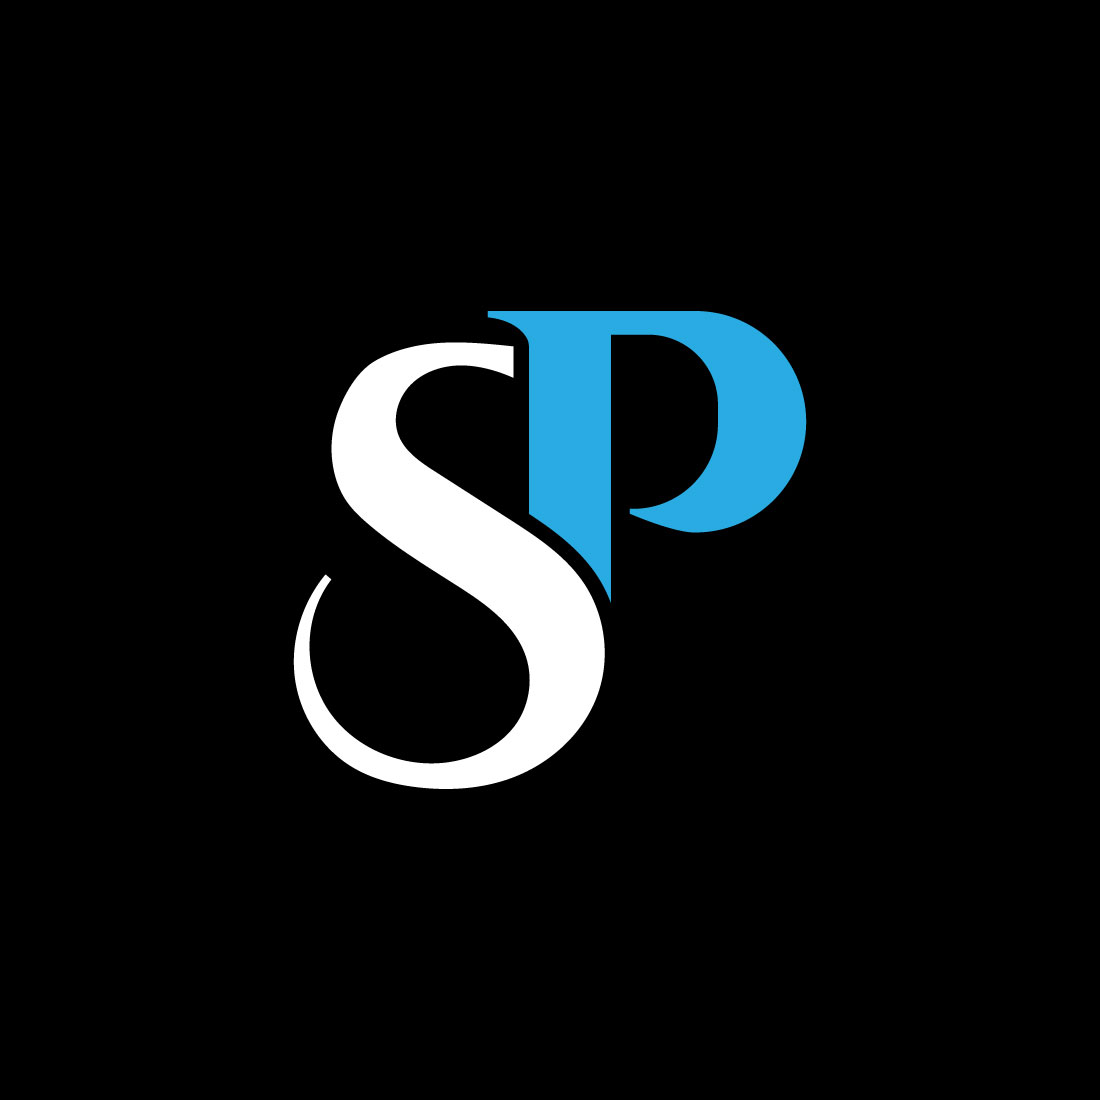 Logo SP Stylish Design Template cover image.